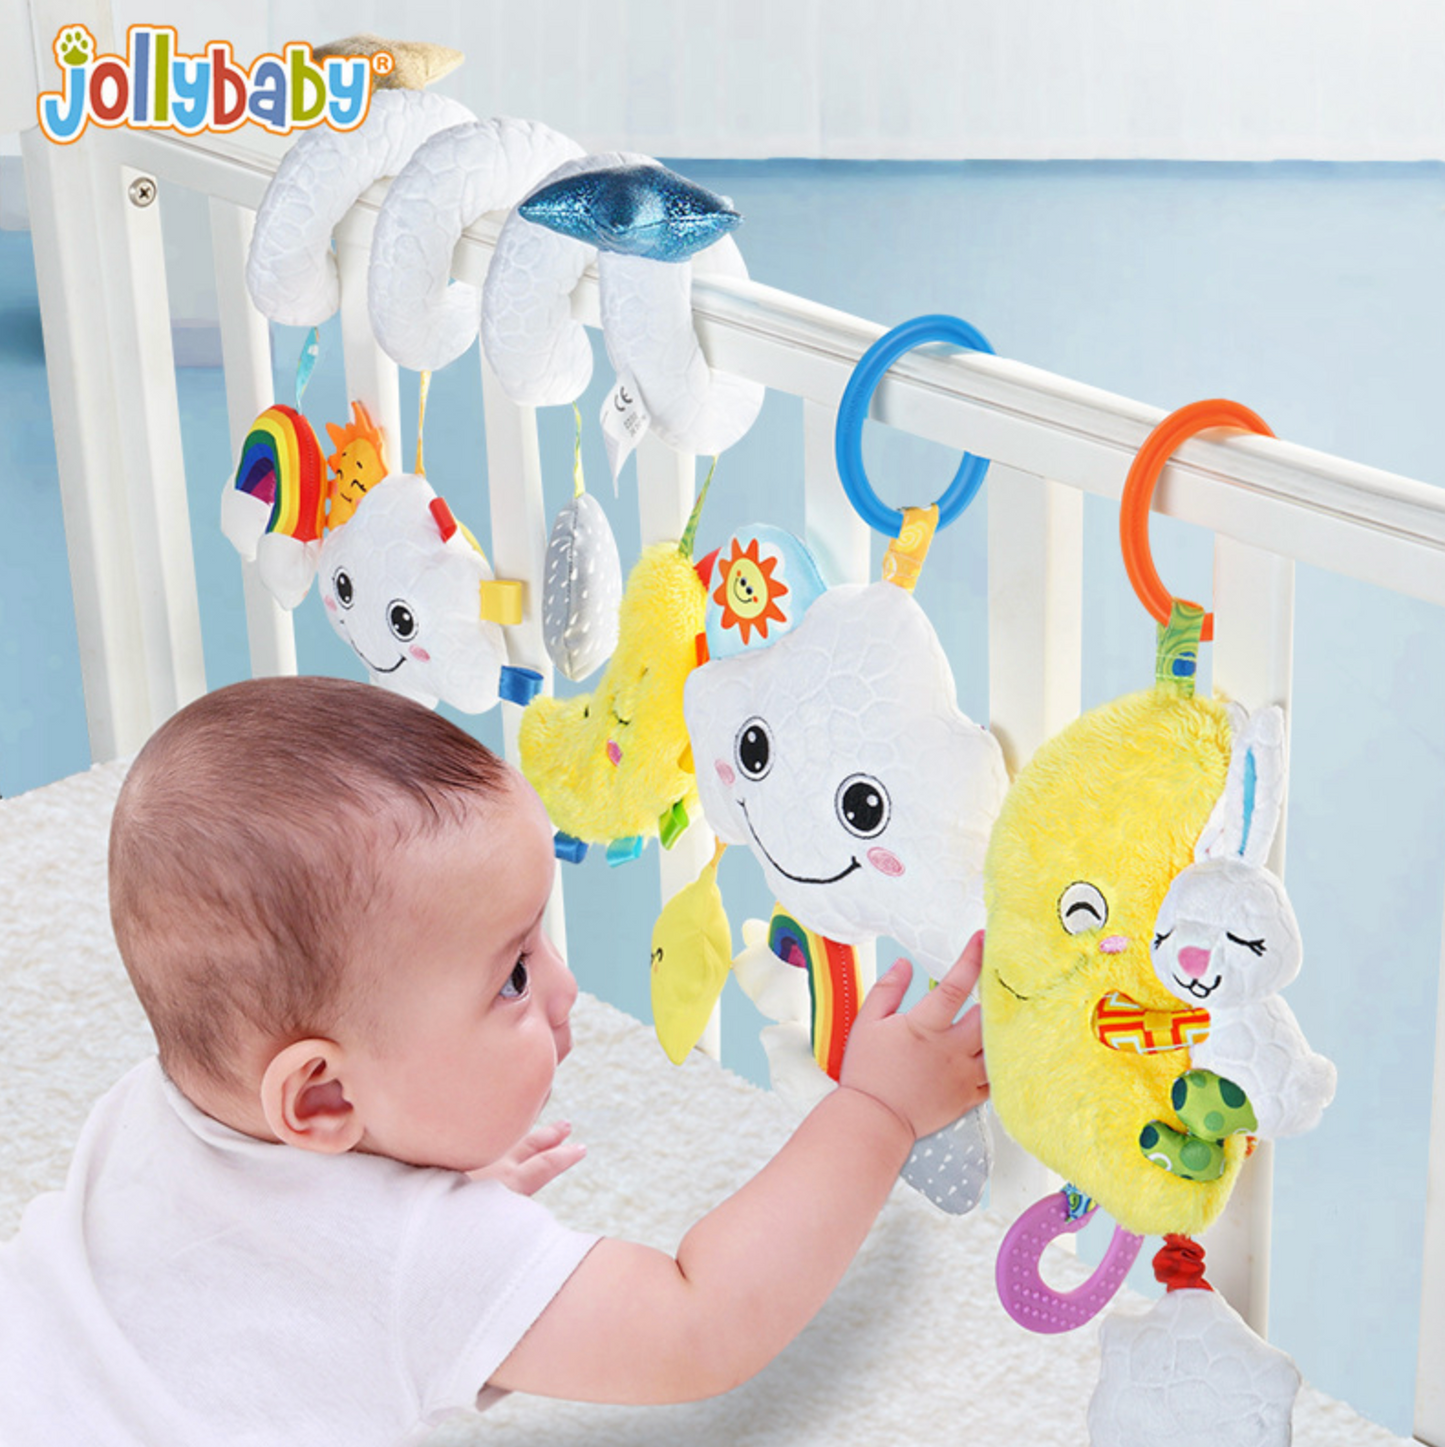 Jollybaby Plush Activity Hanging Spiral Toy